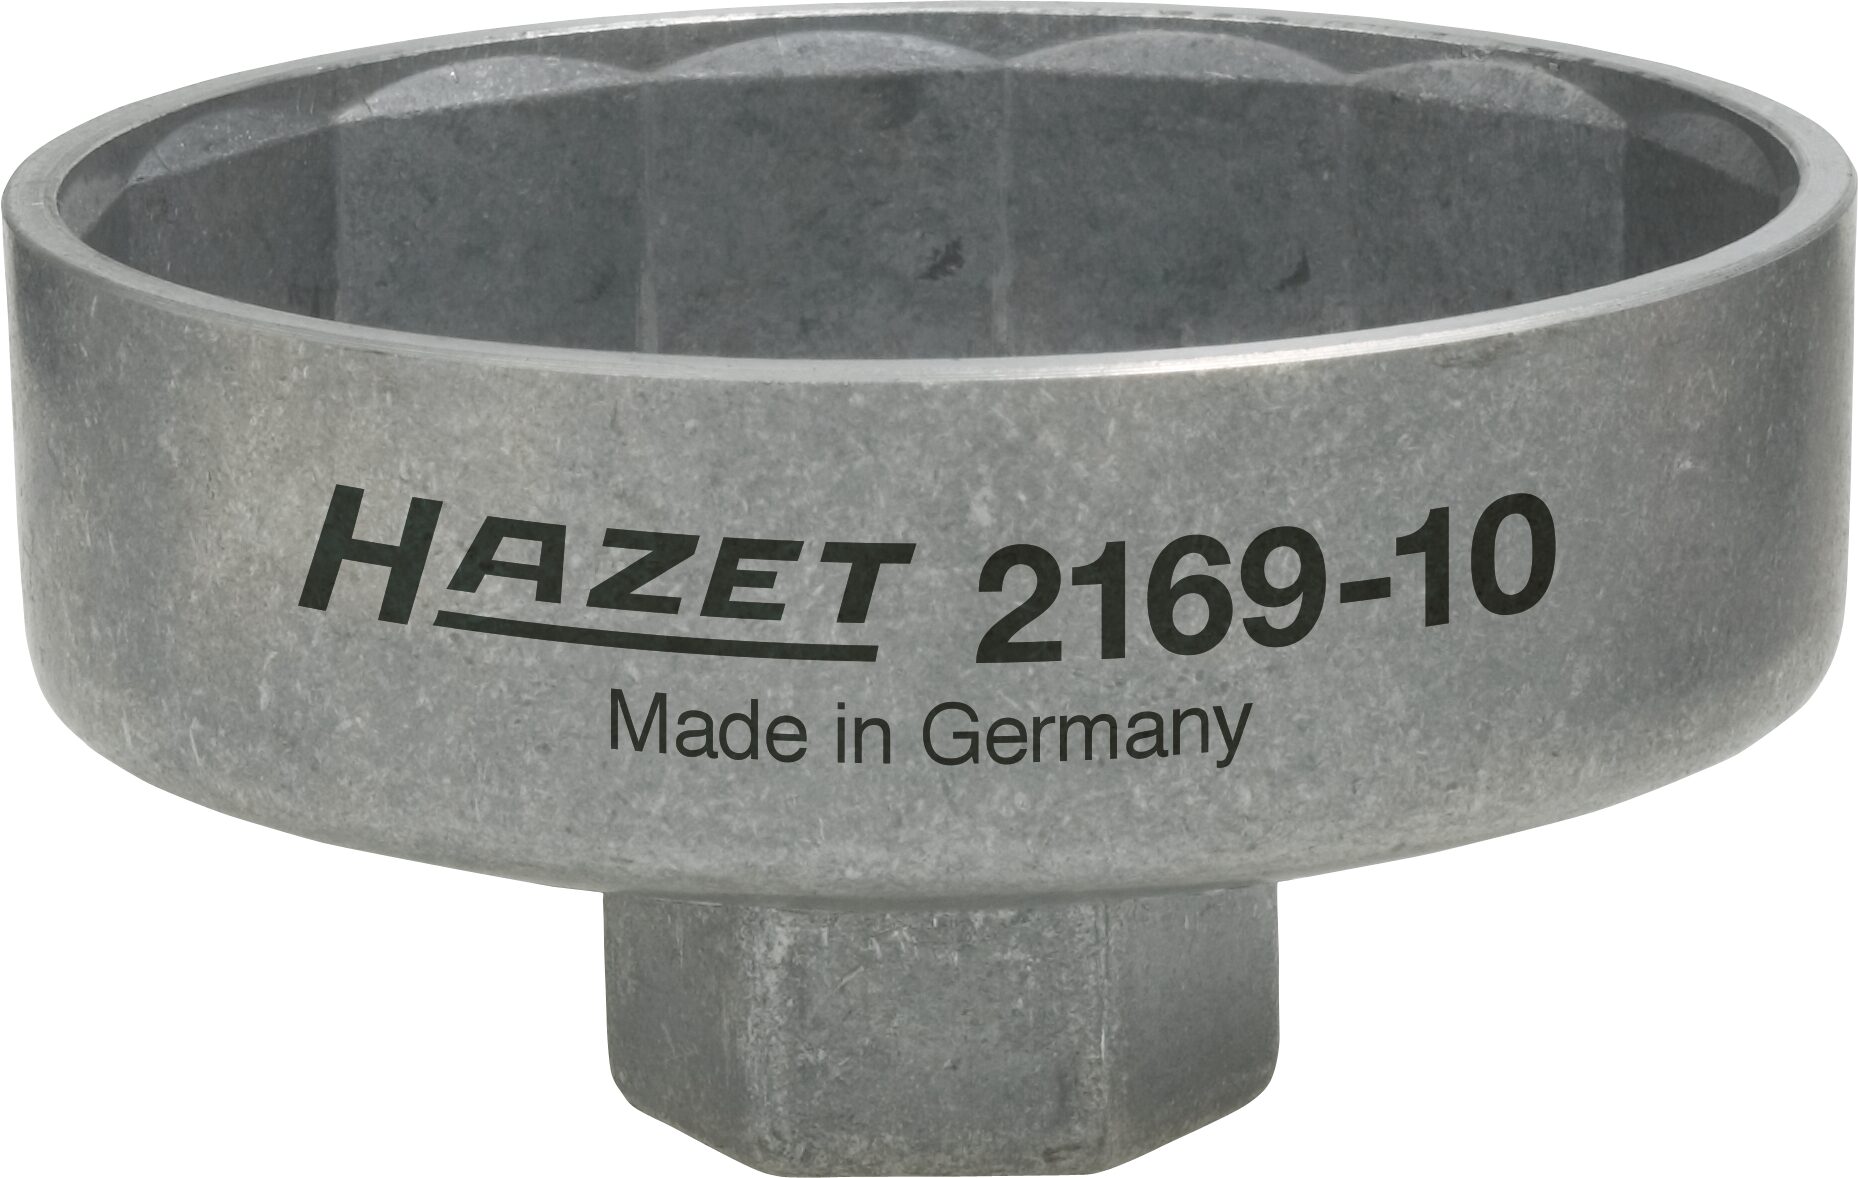 HAZET Ölfilter-Schlüssel 2169-10 ∙ Vierkant hohl 10 mm (3/8 Zoll) ∙  Außen-14-kant Profil